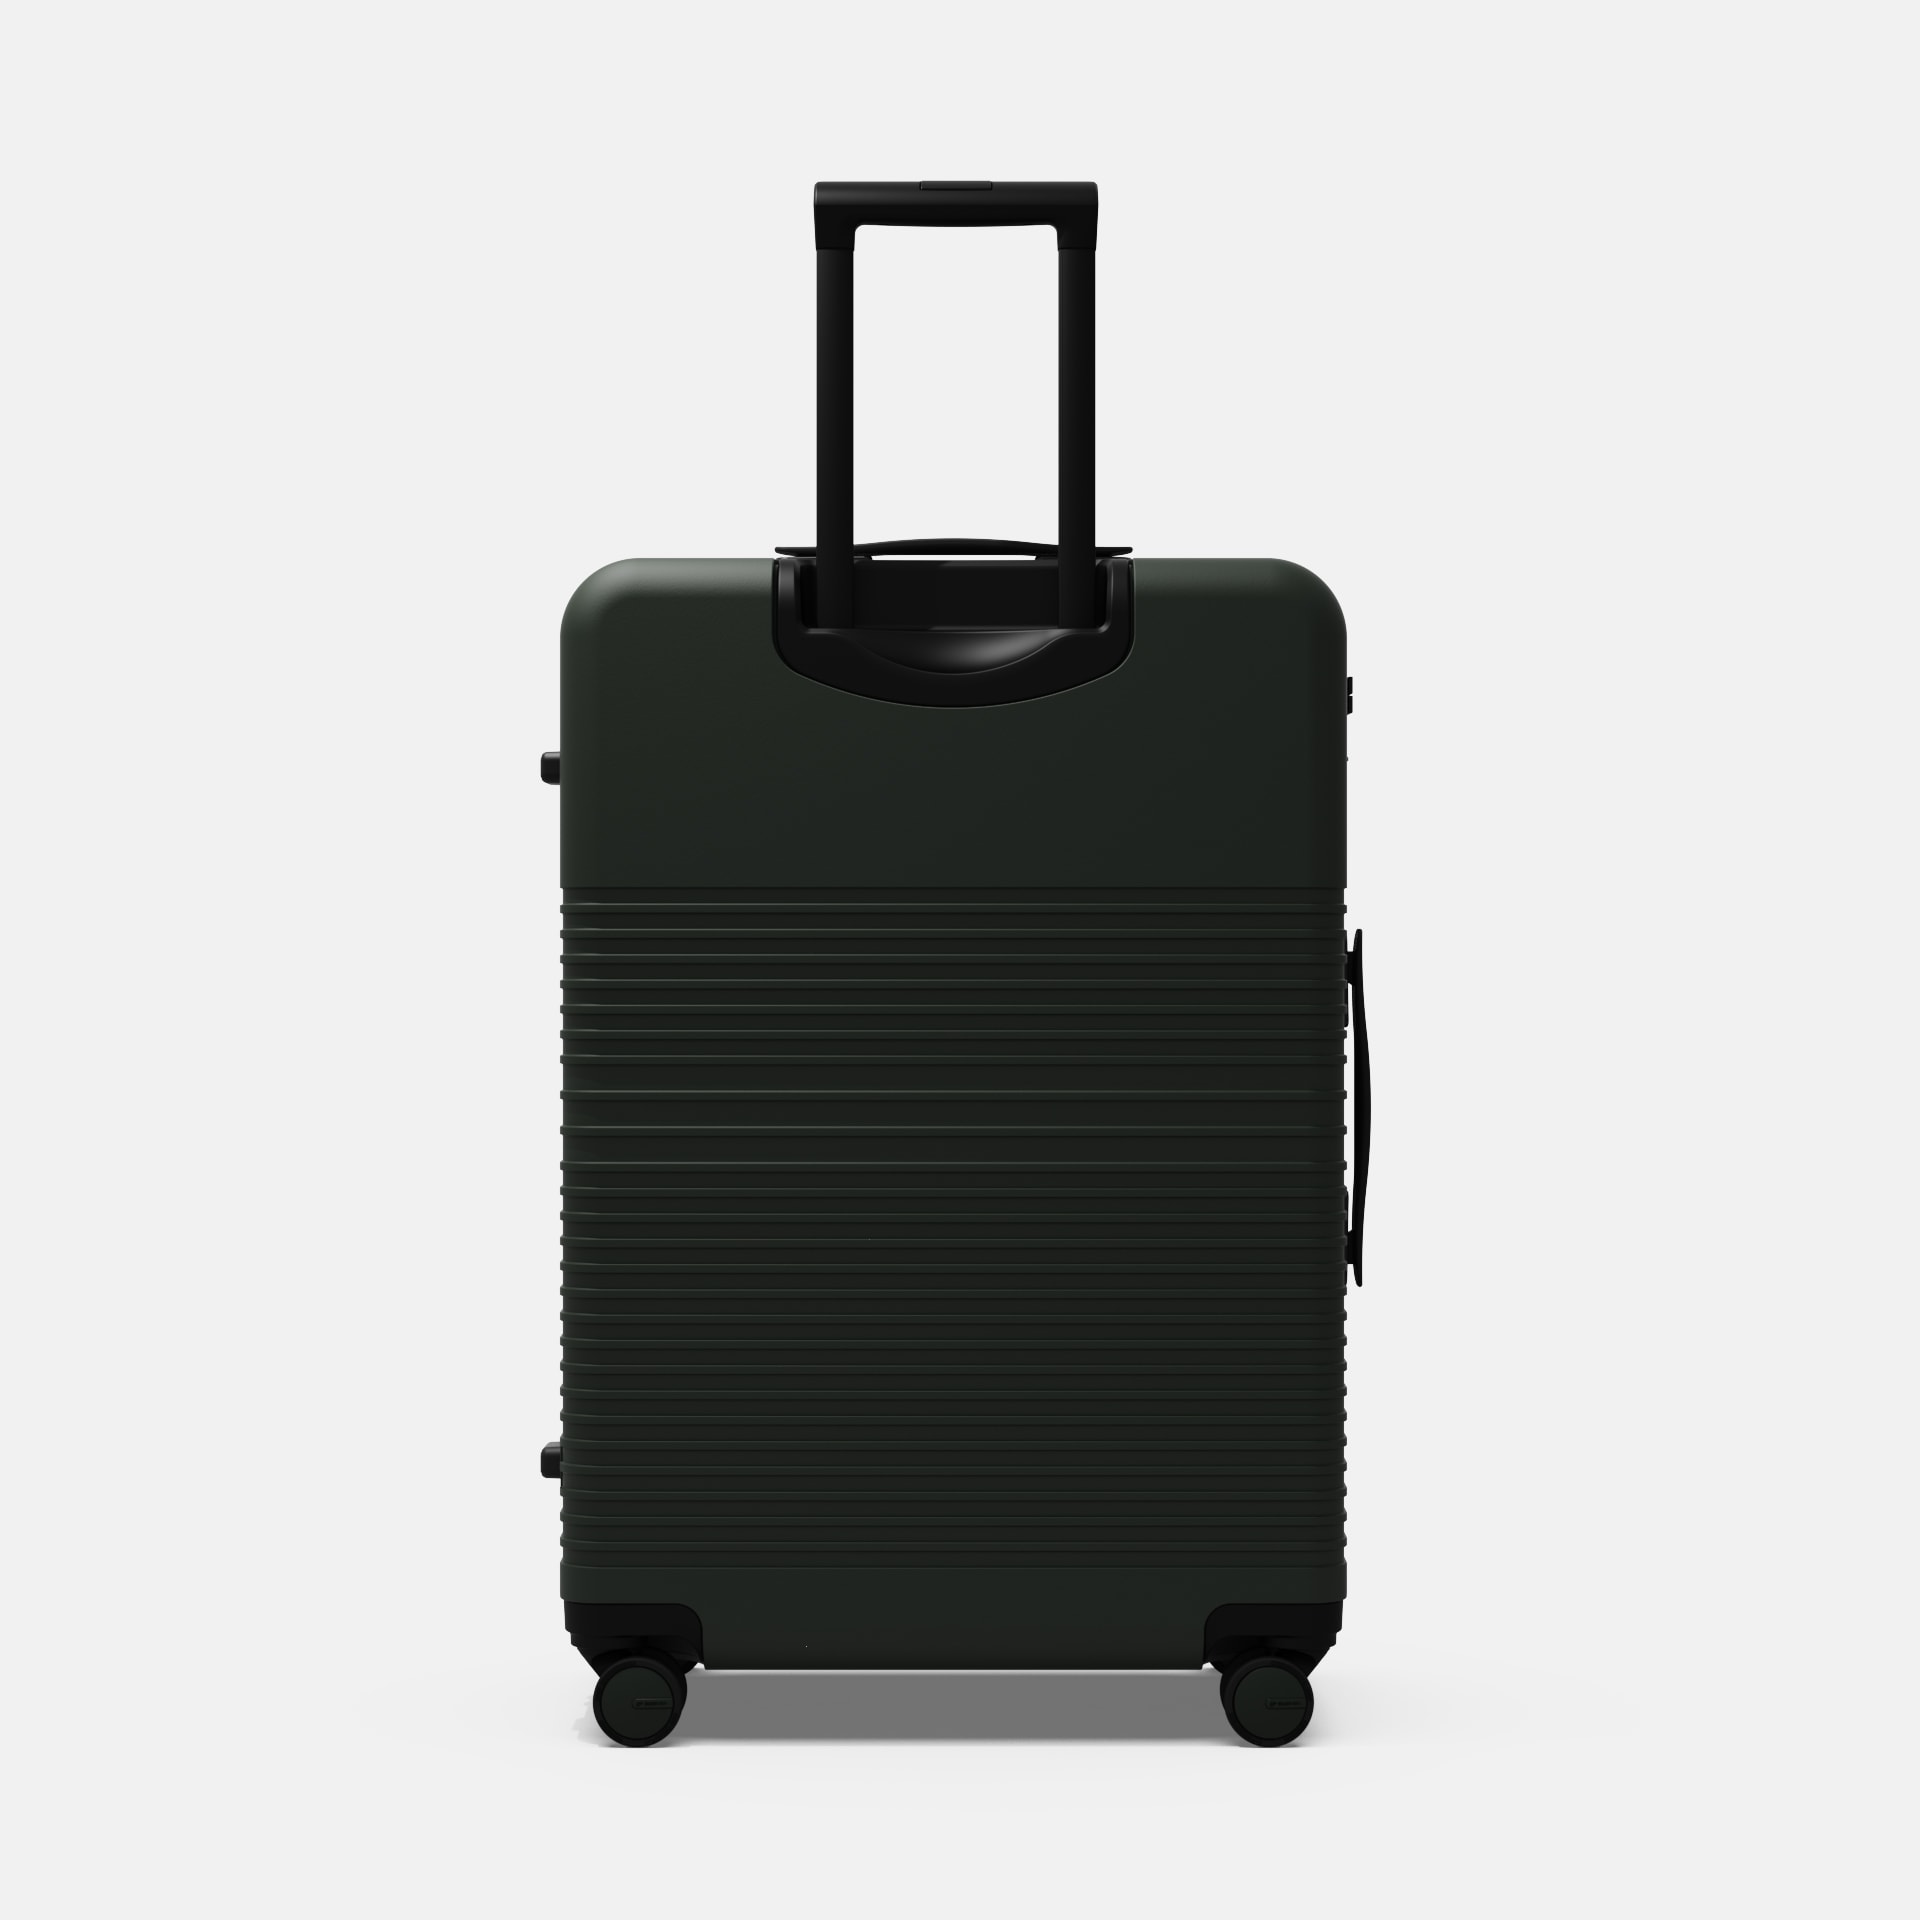 Nortvi dark green check-in suitcase